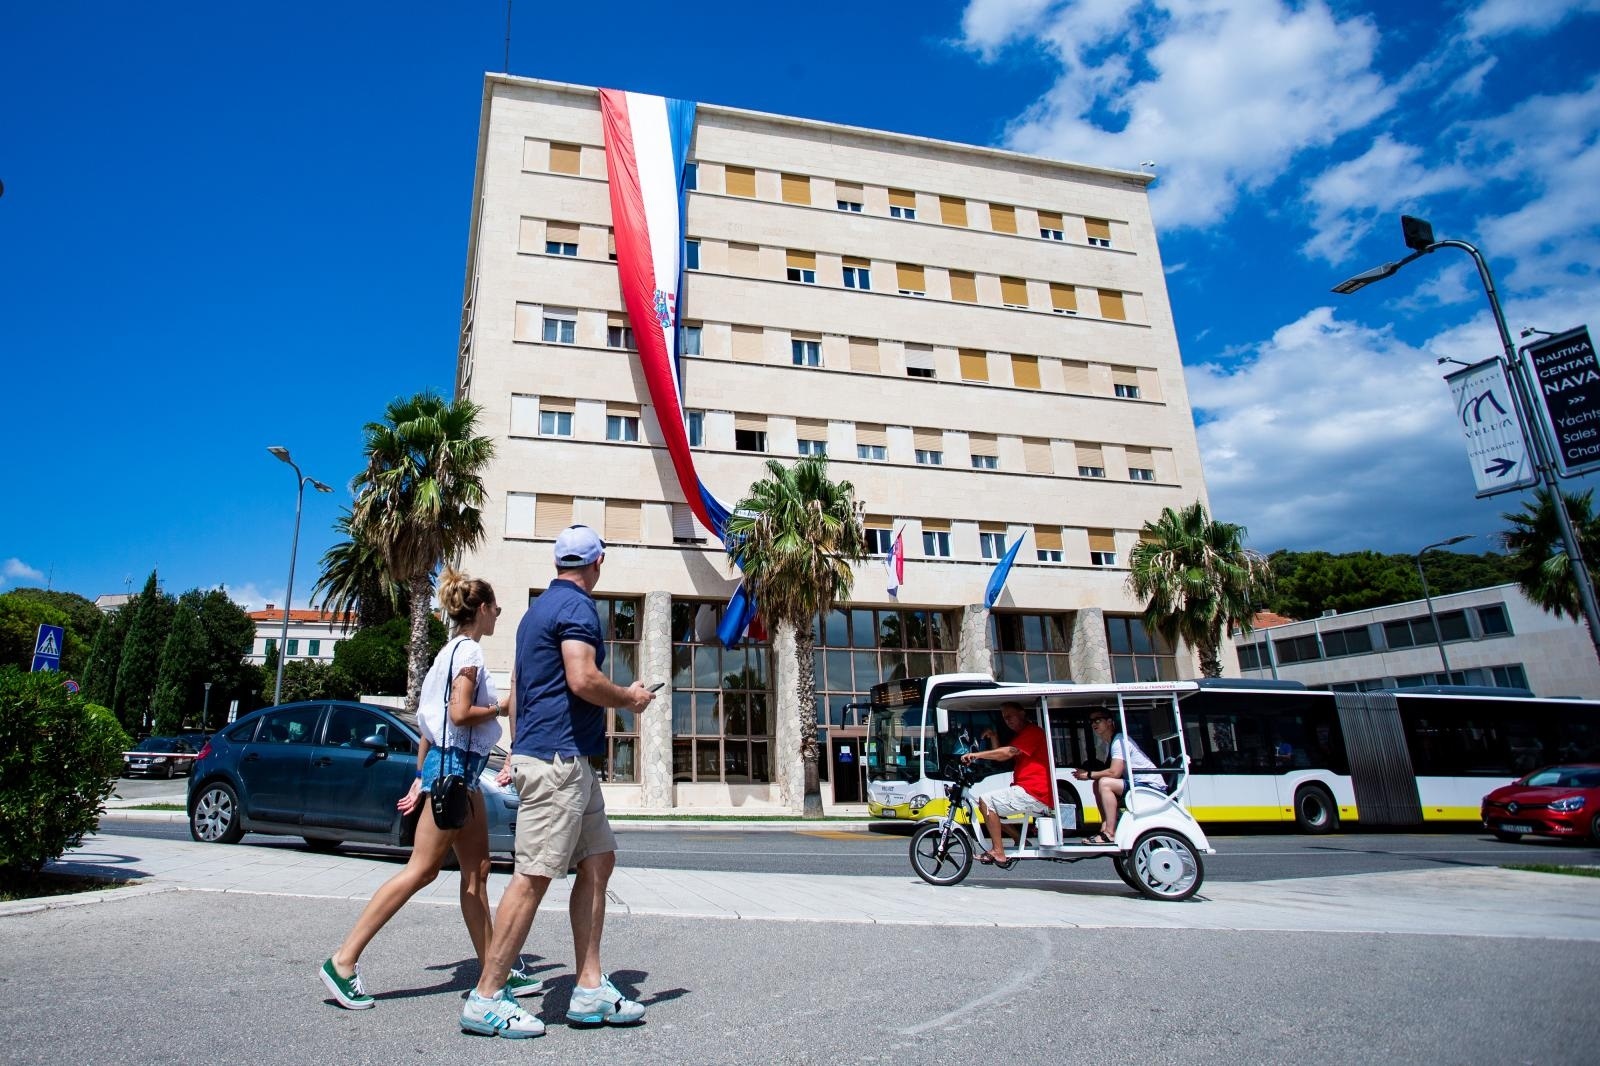 04.08.2020., Split - Na zgradi Gradske uprave u Splitu izvjesena zastava duga 22 metra.
Photo: Milan Sabic/PIXSELL